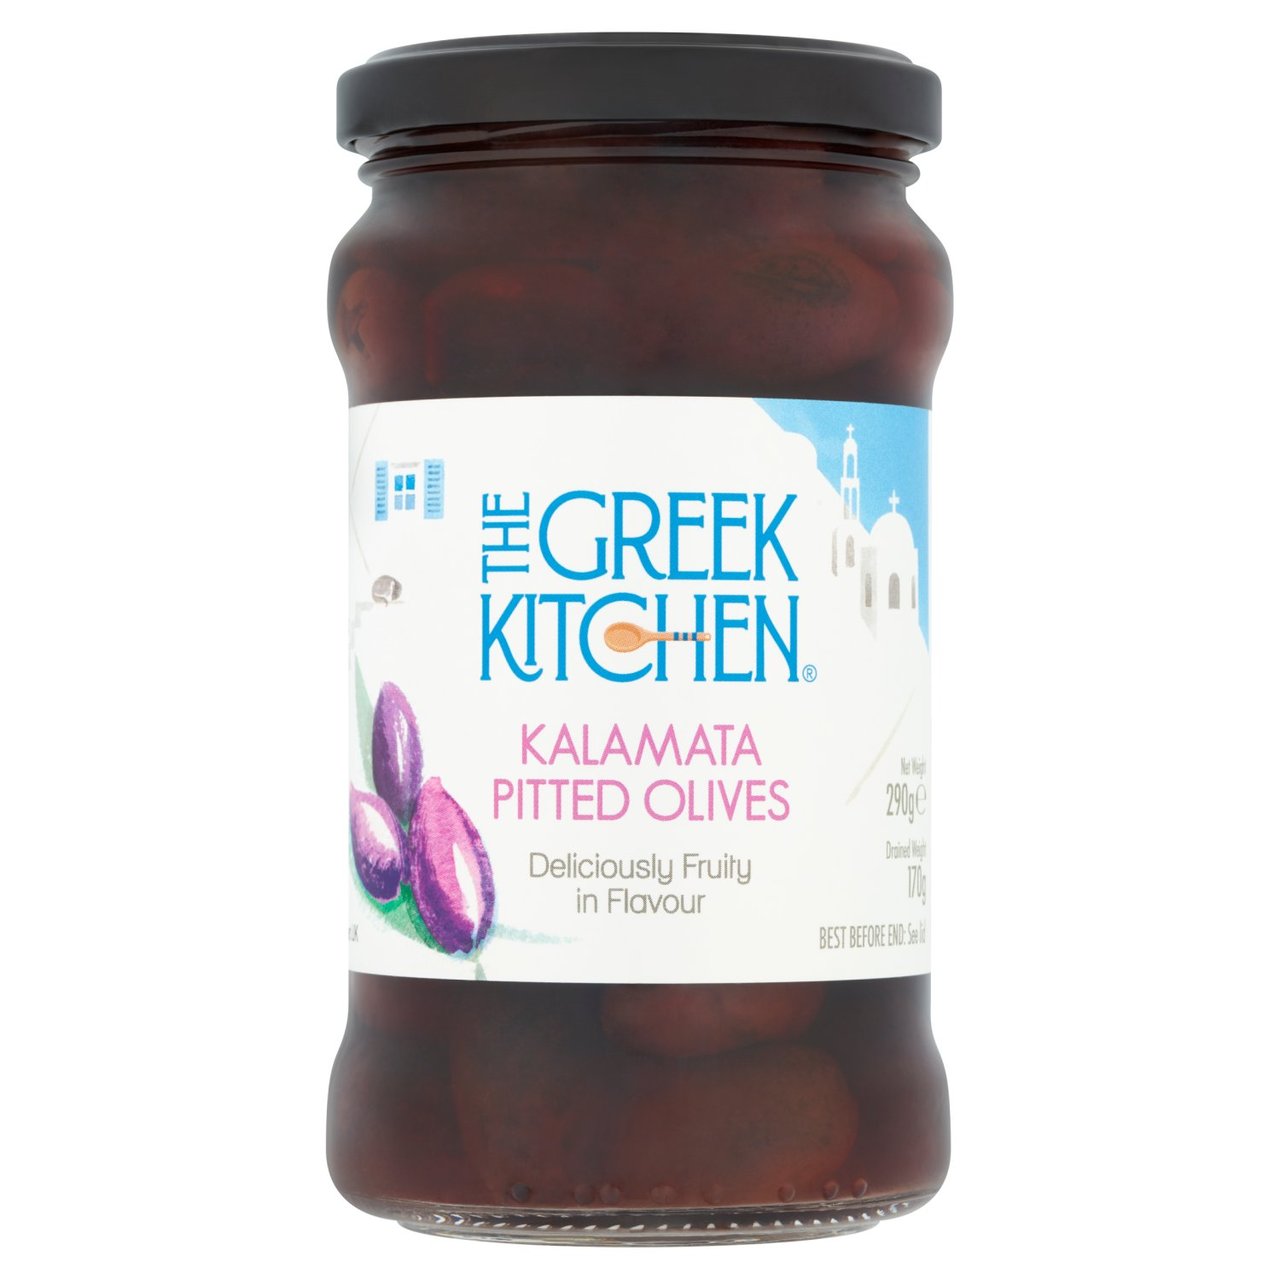 The Greek Kitchen Kalamata Pitted Olives